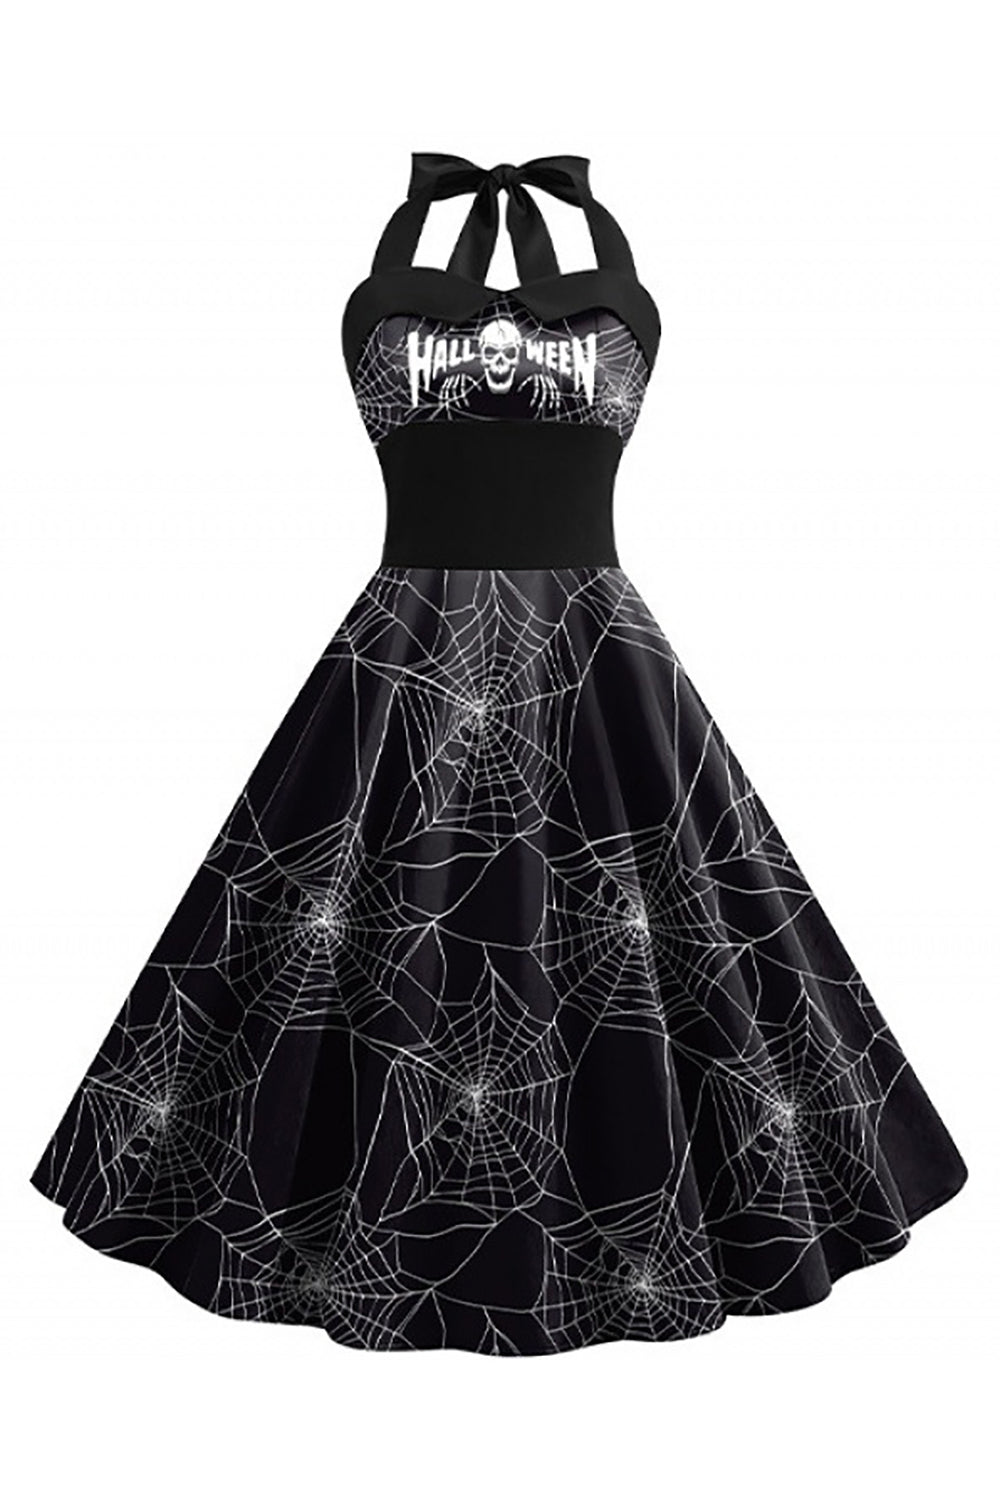 Halloween mønster svart halter hals vintage kjole